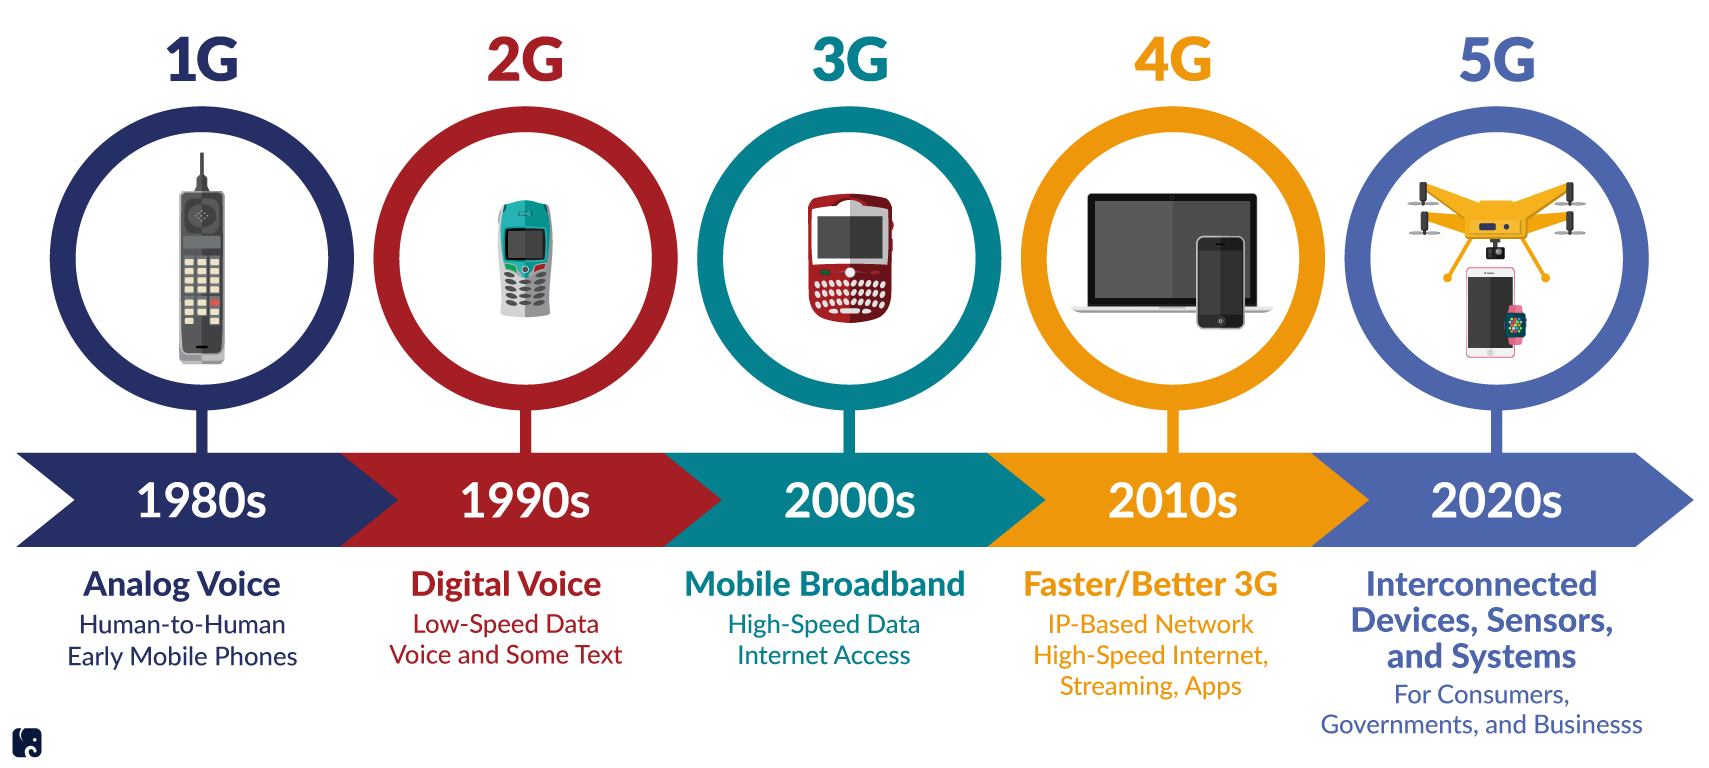 Pai 5g 4g. Технологии сотовой связи 2g 3g 4g. Поколения сотовой связи 2g 3g и 4g. 4g стандарты сотовой сети. Сотовая связь 1g 2g 3g 4g 5g.